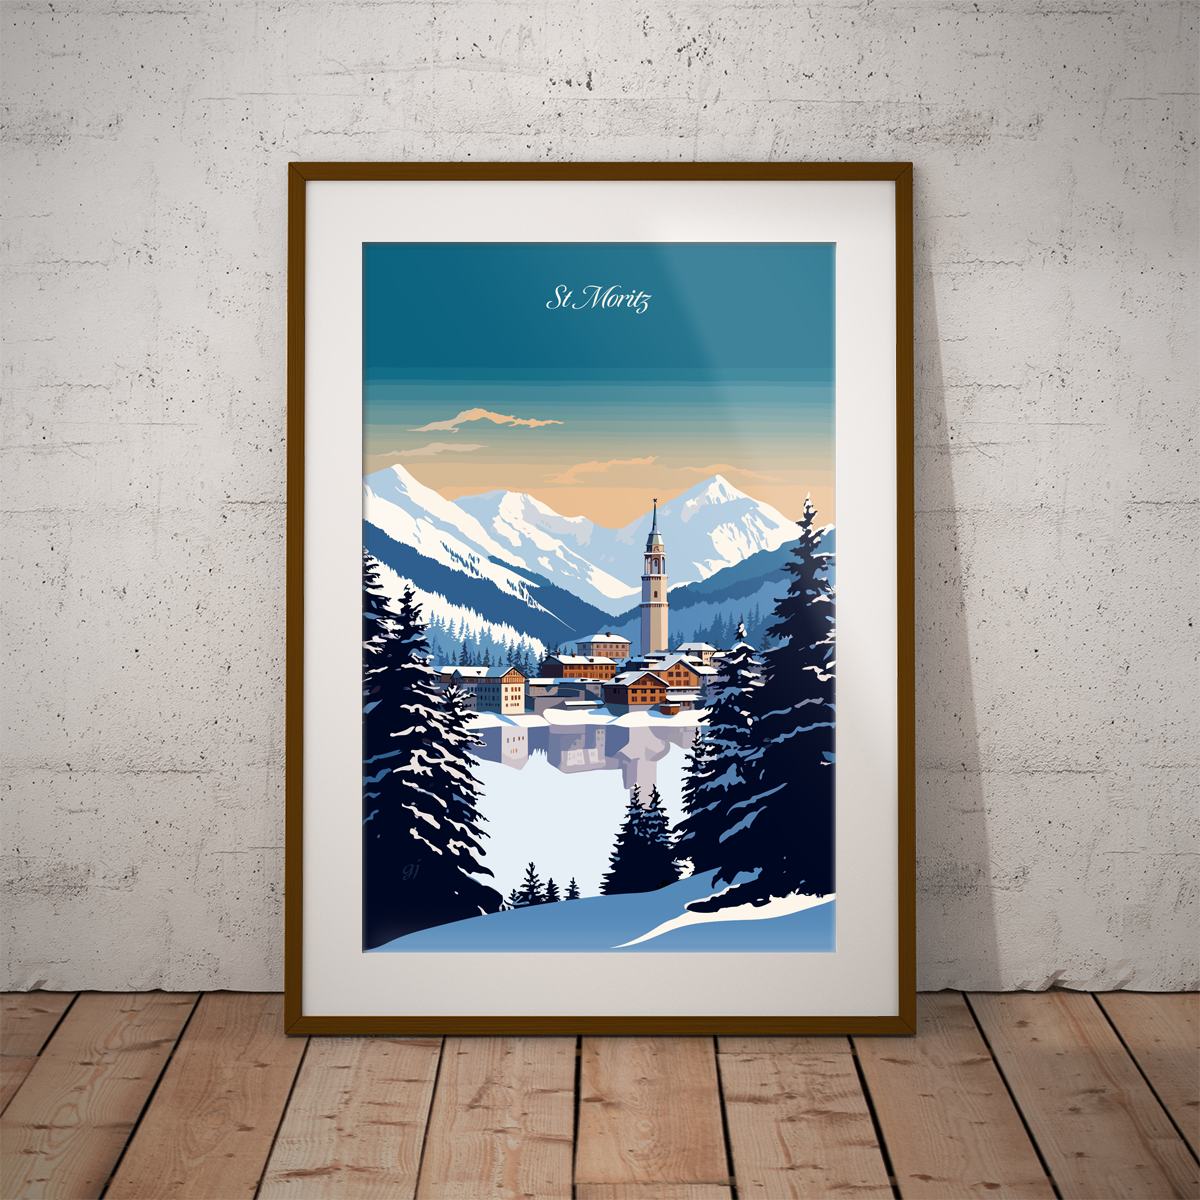 St-Moritz poster by bon voyage design